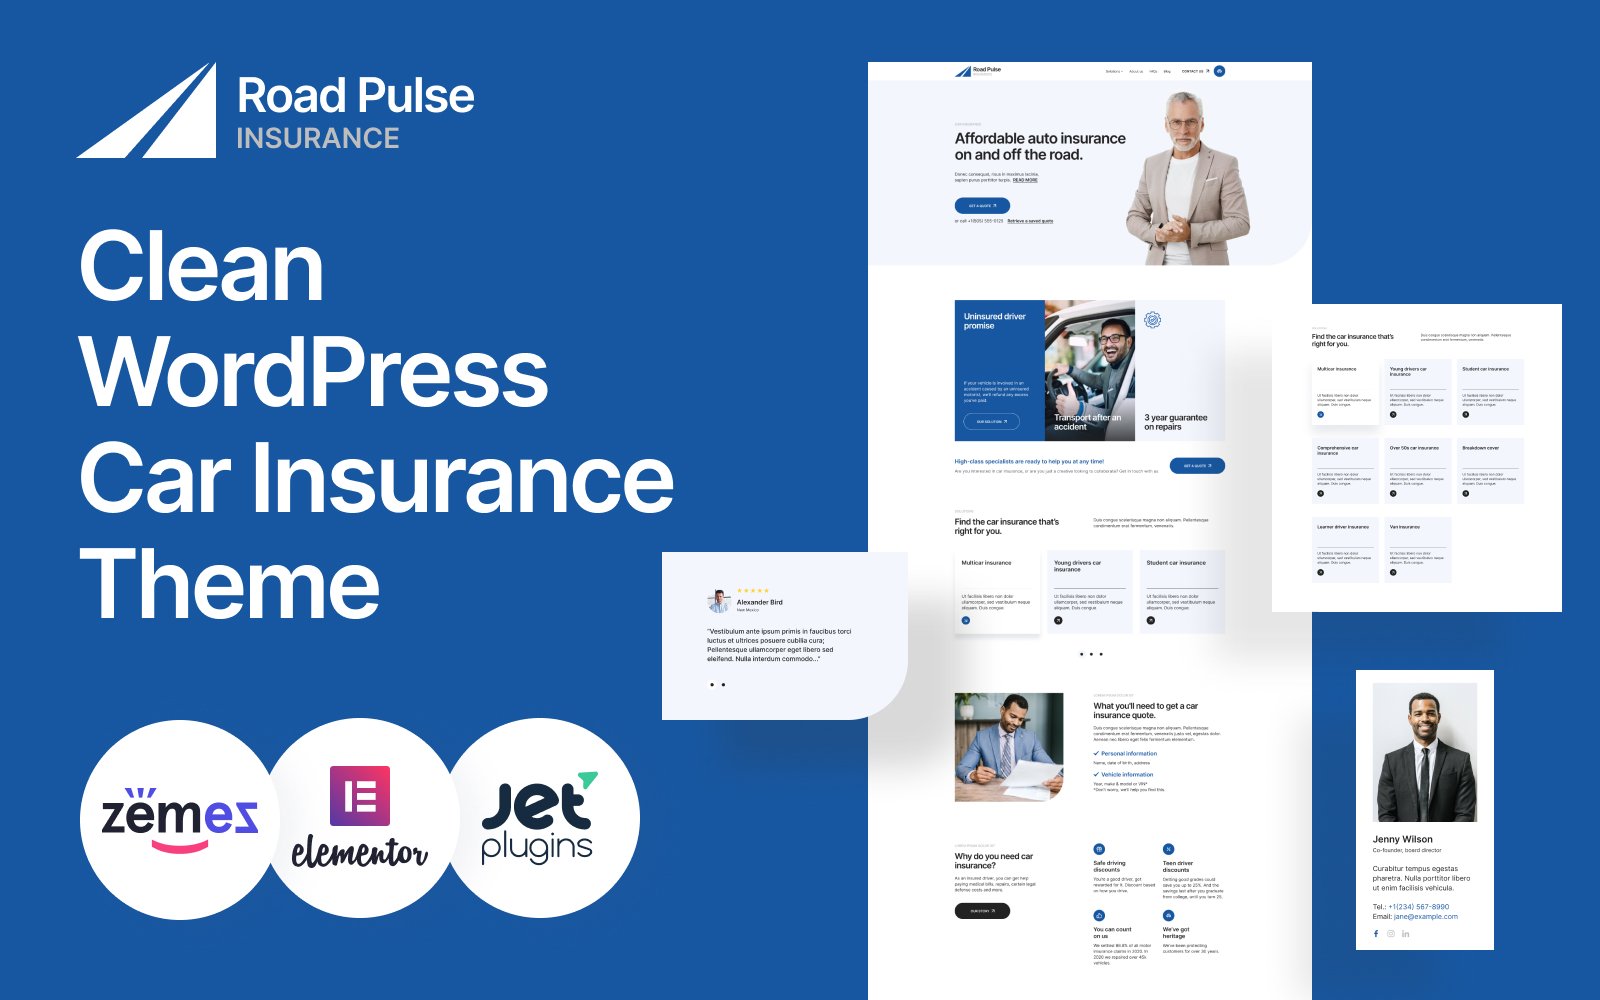 Road Pulse - Clean WordPress Car Insurance Theme WordPress Theme